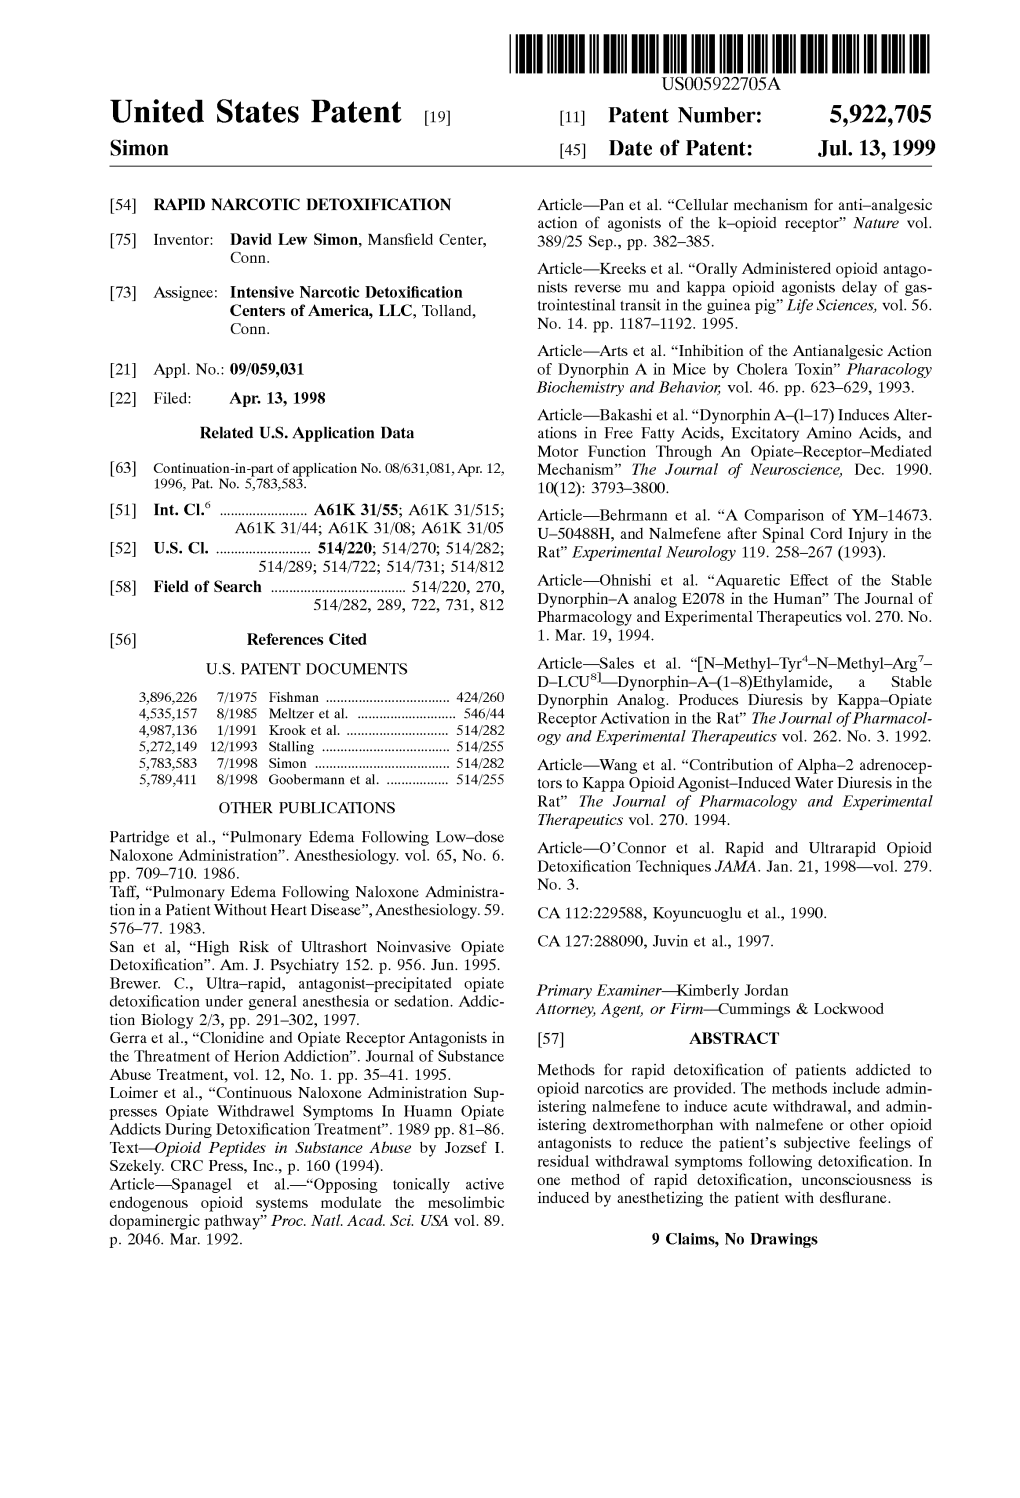 United States Patent (19) 11 Patent Number: 5,922,705 Simon (45) Date of Patent: Jul